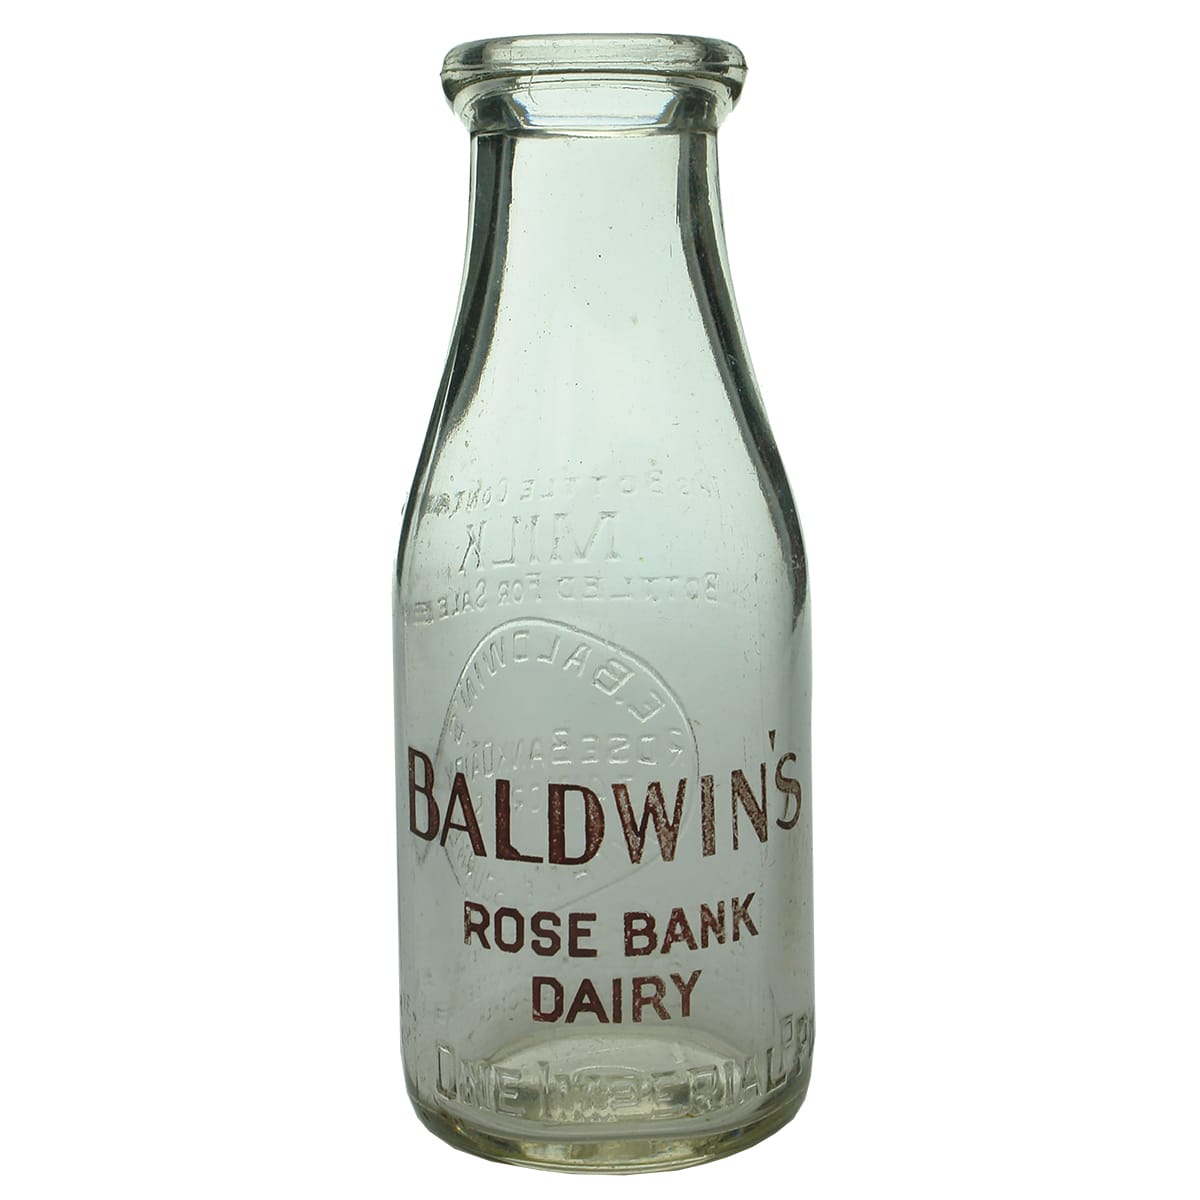 Milk. E. Baldwin's Rose Bank Dairy, South Melbourne. Wad lip. Ceramic Label. 1 Pint.